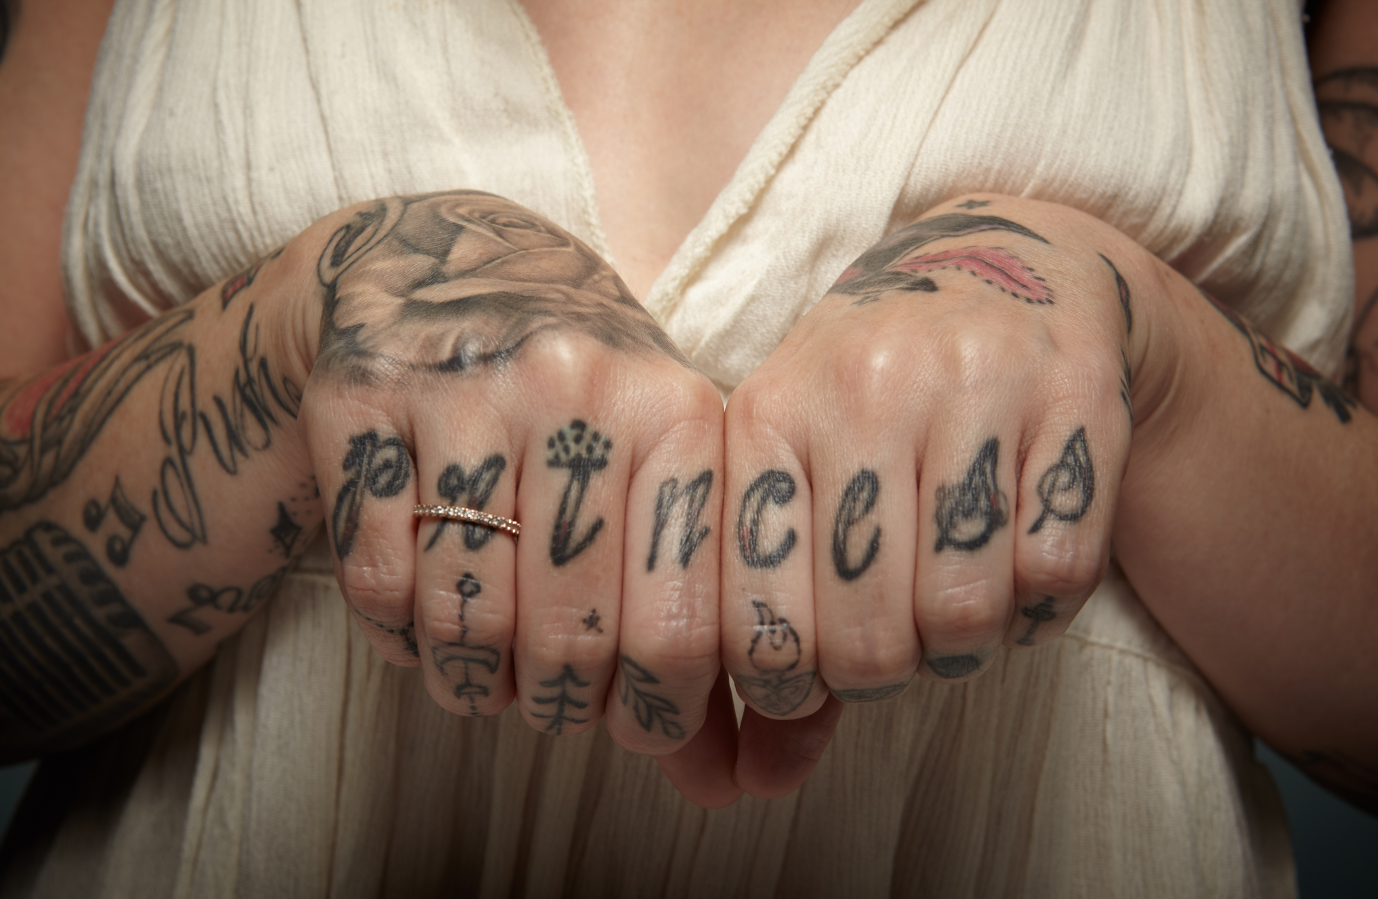 Closeup of Princess Hilla's finger tatoos, spelling out princess